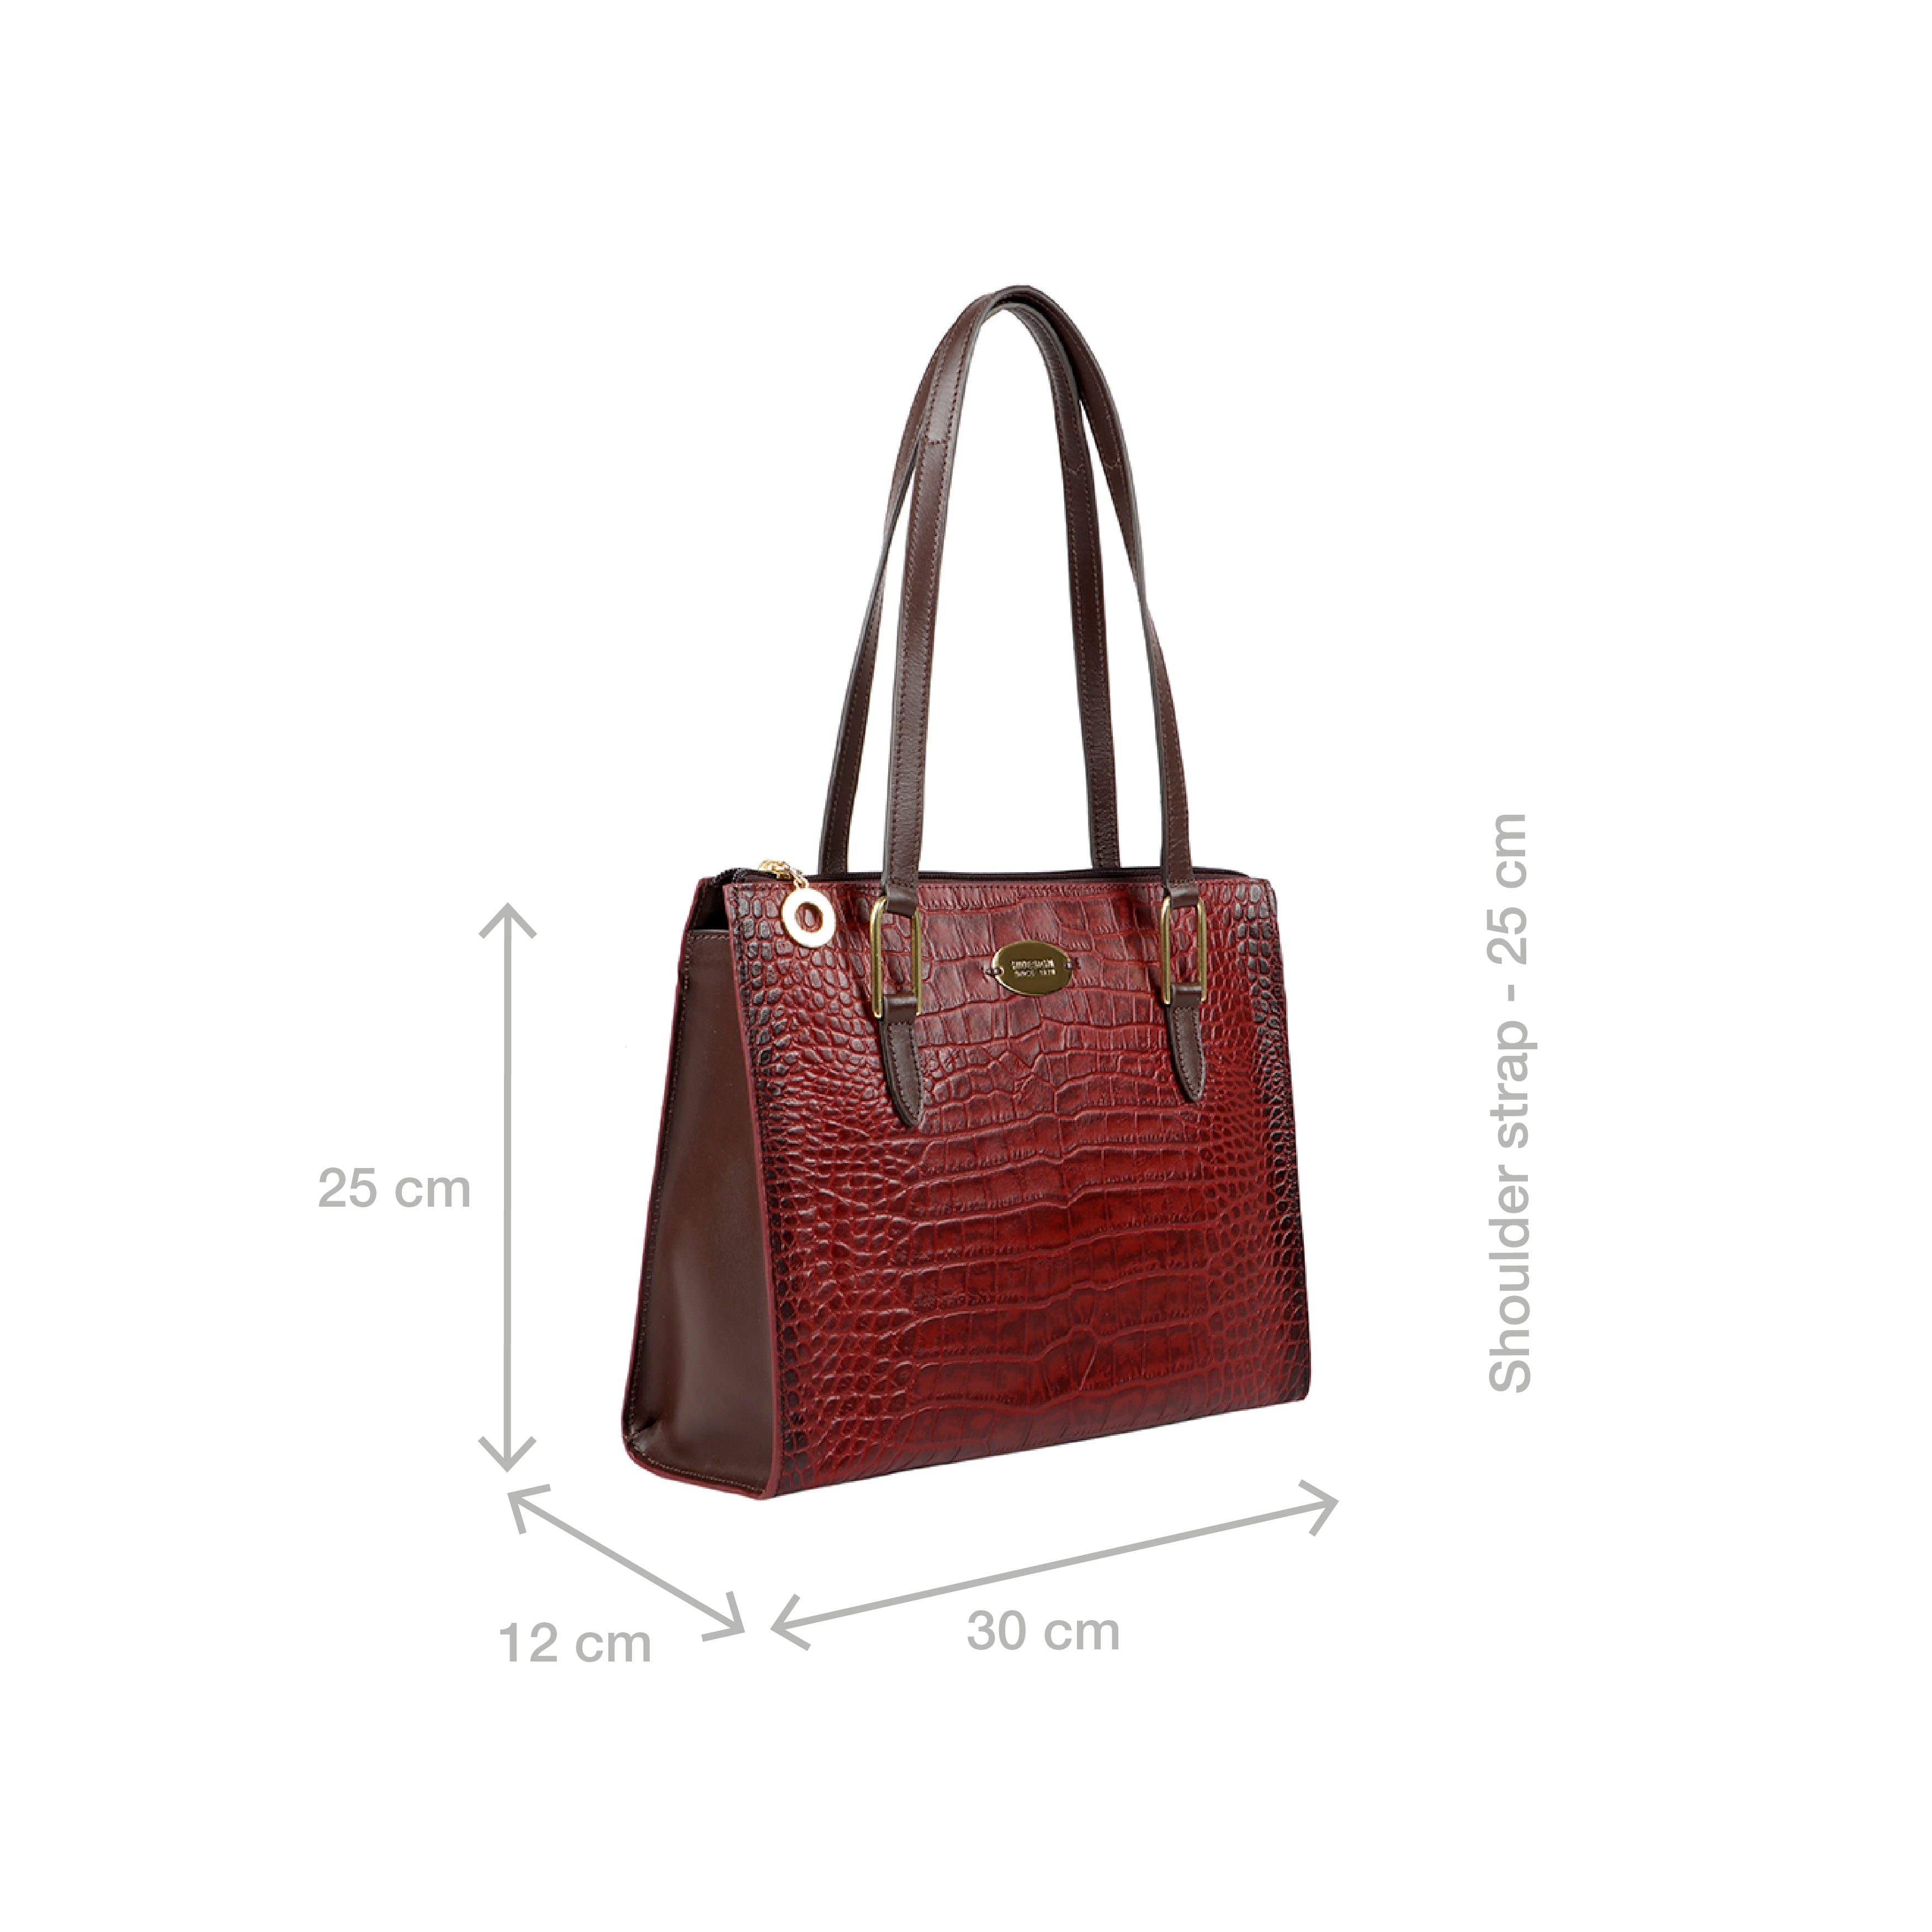 Buy Handcrafted Leather Handbags for Men Online - Hidesign